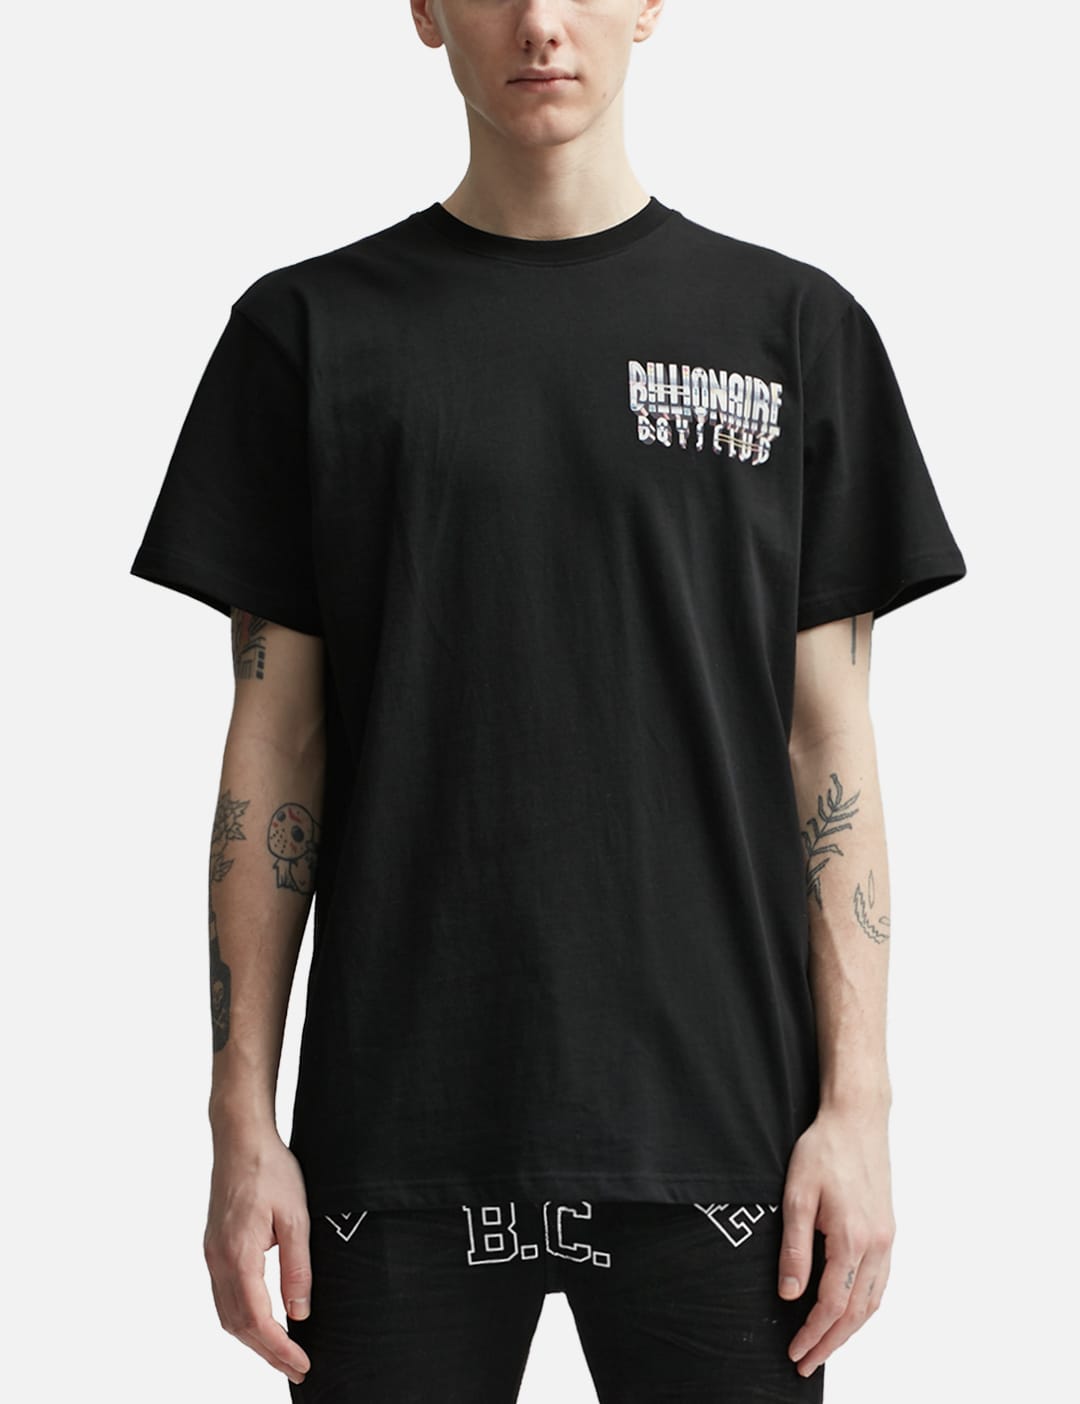 Billionaire Boys Club - BB DROID SS T-shirt | HBX - Globally